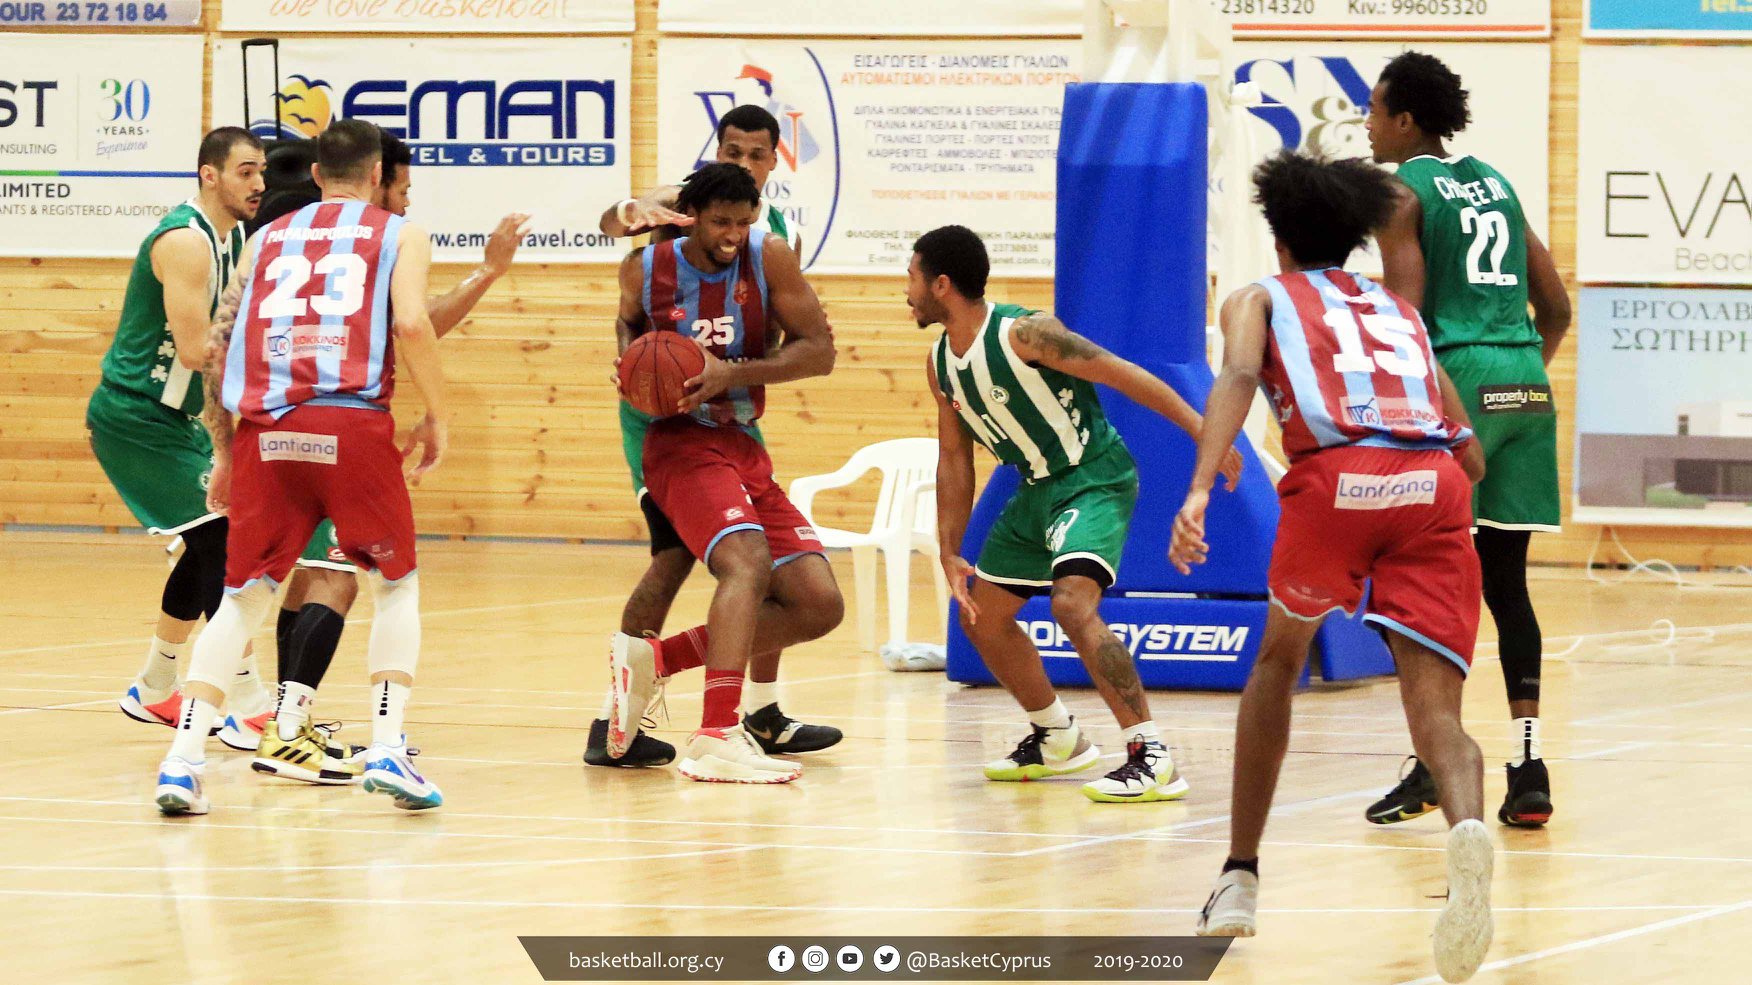 6 ENP, Basketball, victory, Omonia